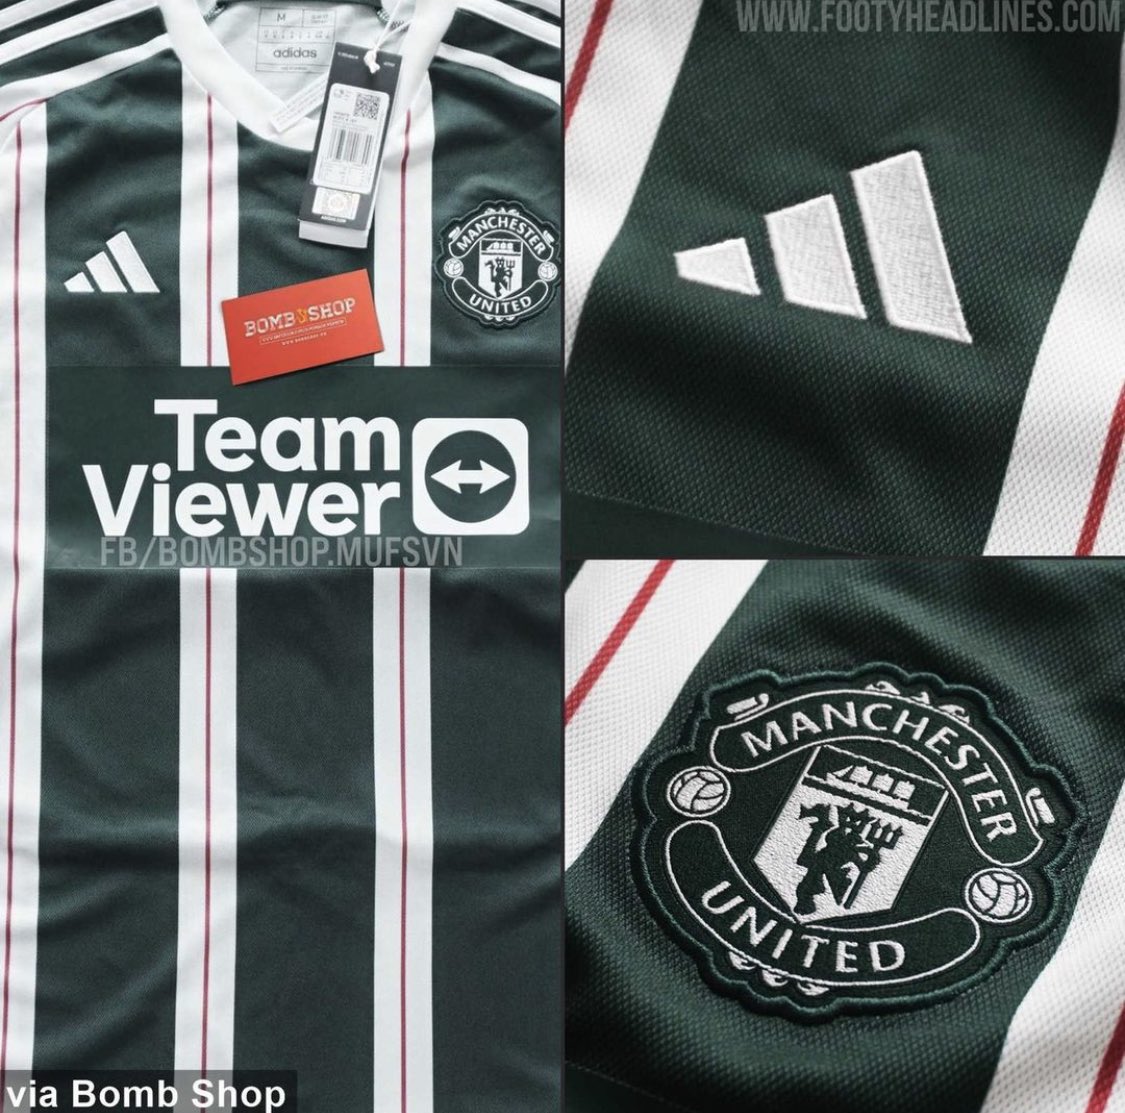 Leaked Manchester United away kit